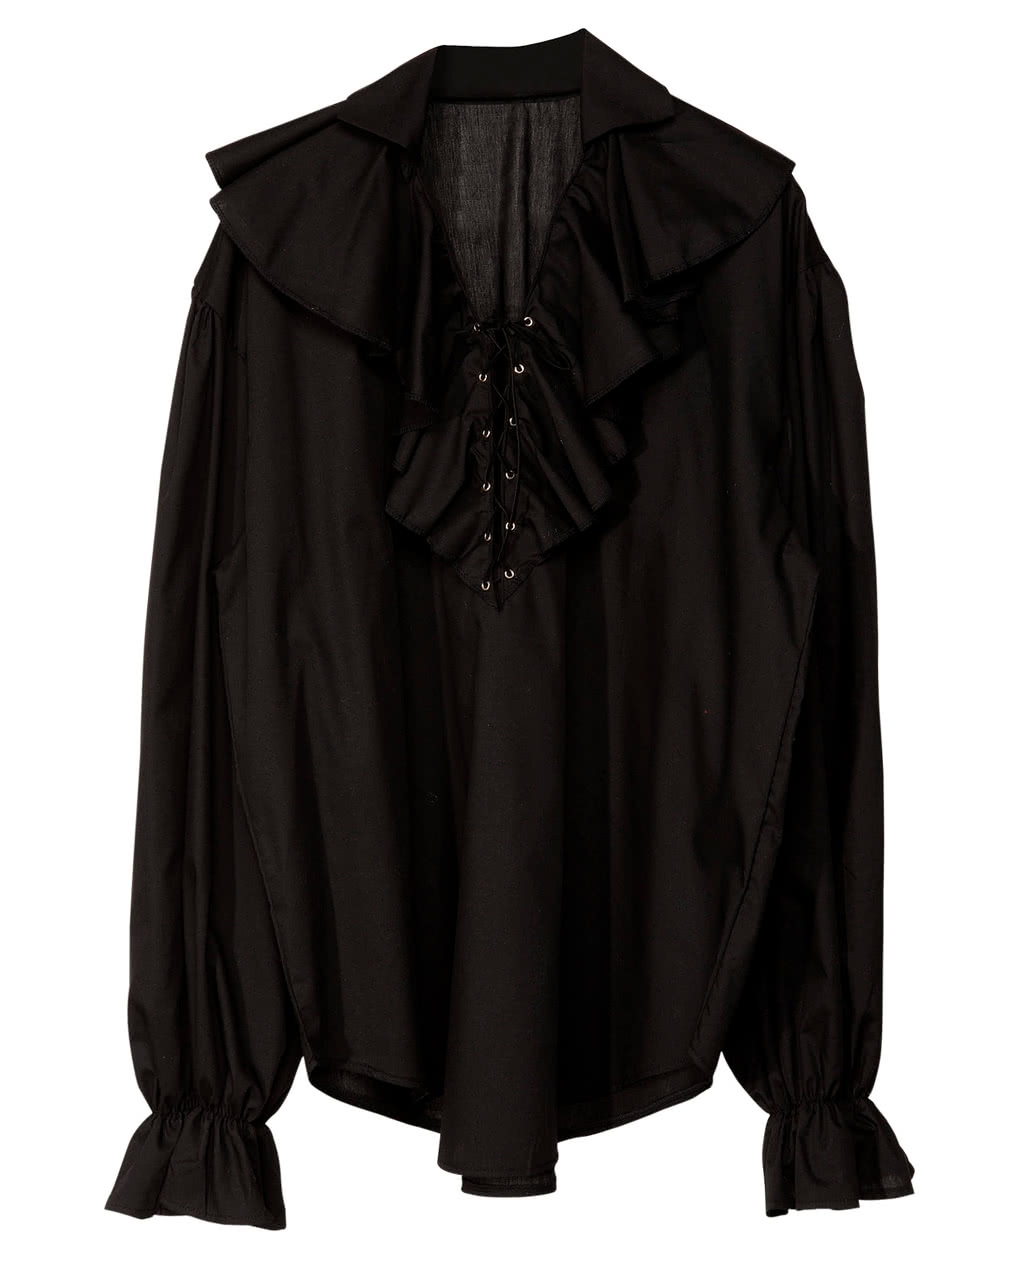 Renaissance Pirate Shirt with Ruffled Cuffs M, Black 